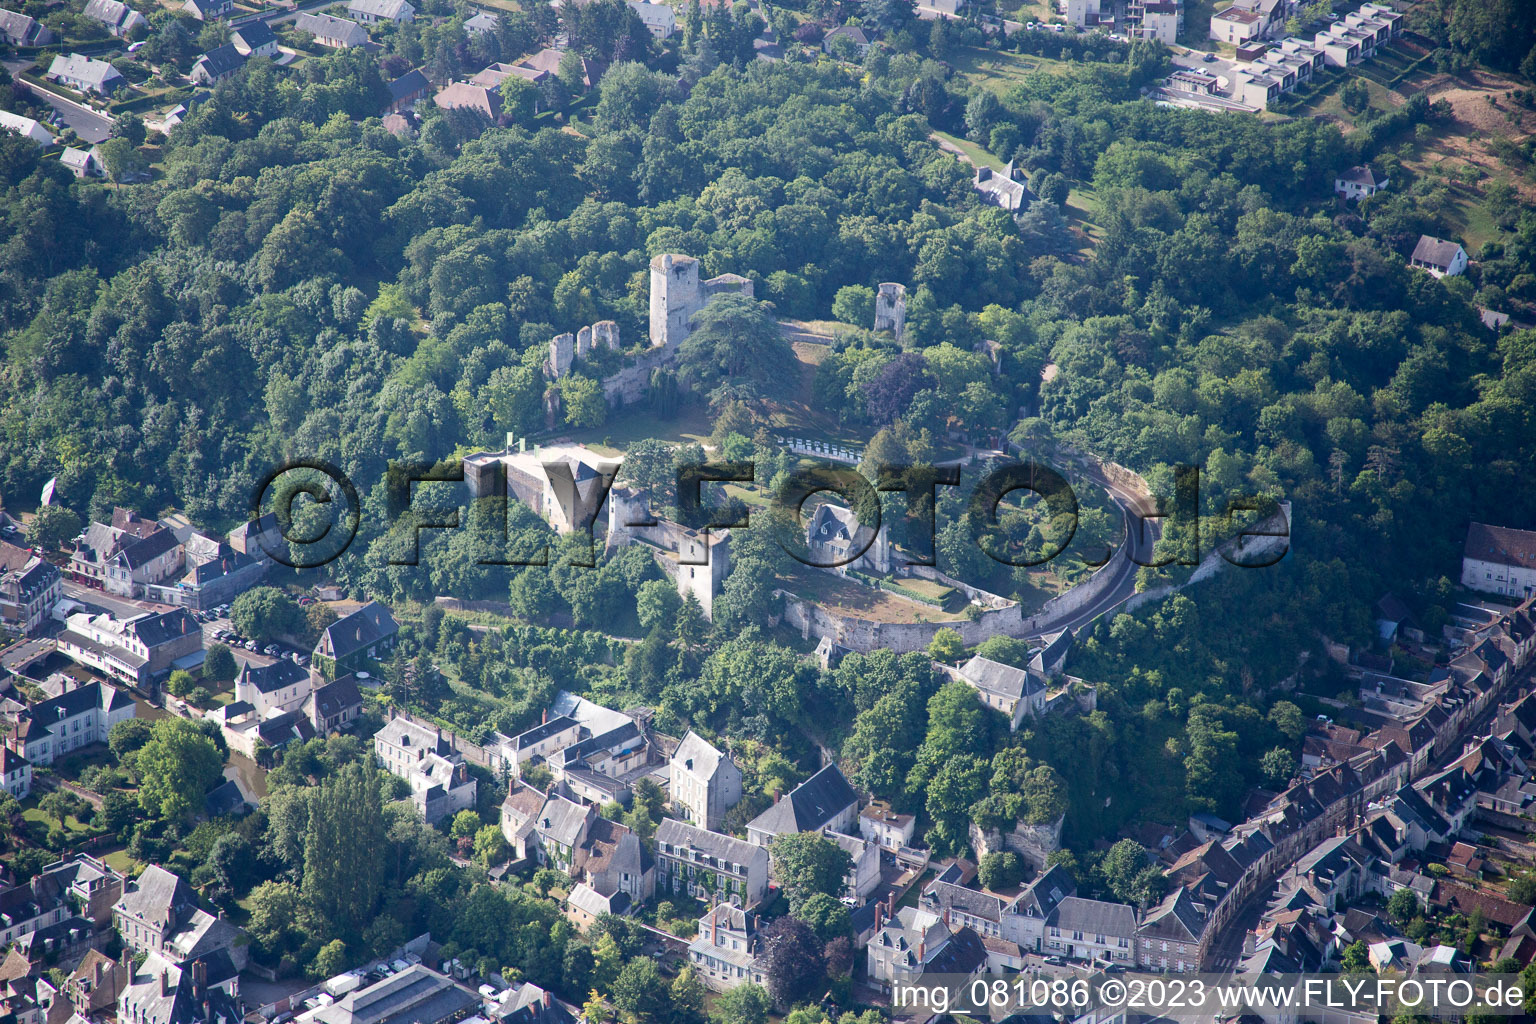 Vendôme im Bundesland Loir-et-Cher, Frankreich aus der Drohnenperspektive